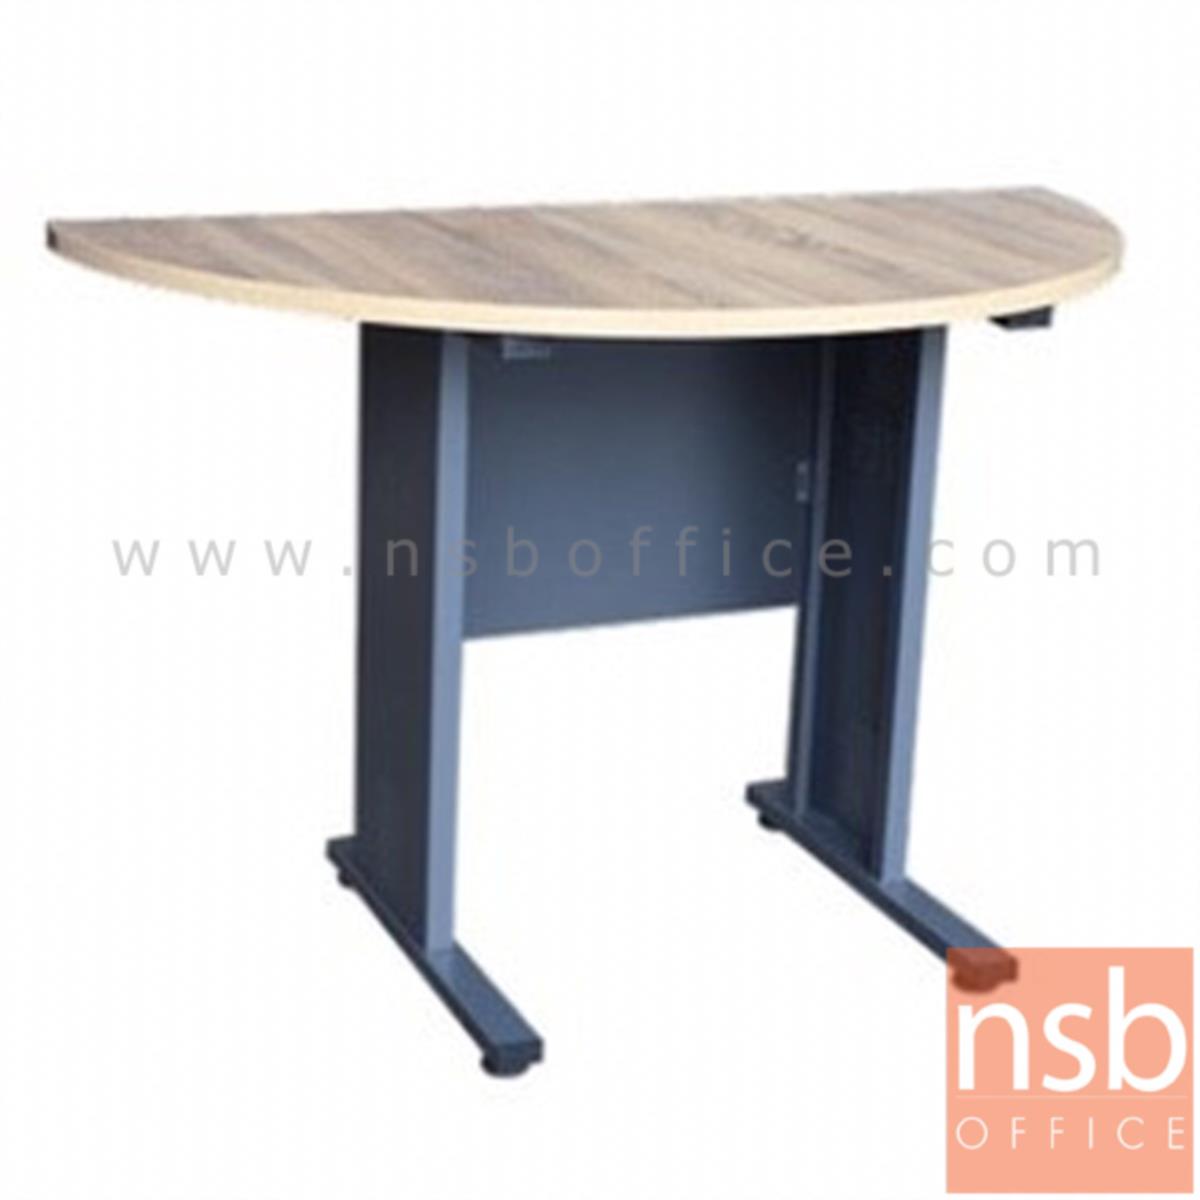 A10A071:โต๊ะเข้ามุม รุ่น Prodigy (โพรดิจี้) ขนาด 120W cm. ขาเหล็ก  สีโซลิคตัดเทาเข้มหรือสีมูจิตัดเทาเข้ม